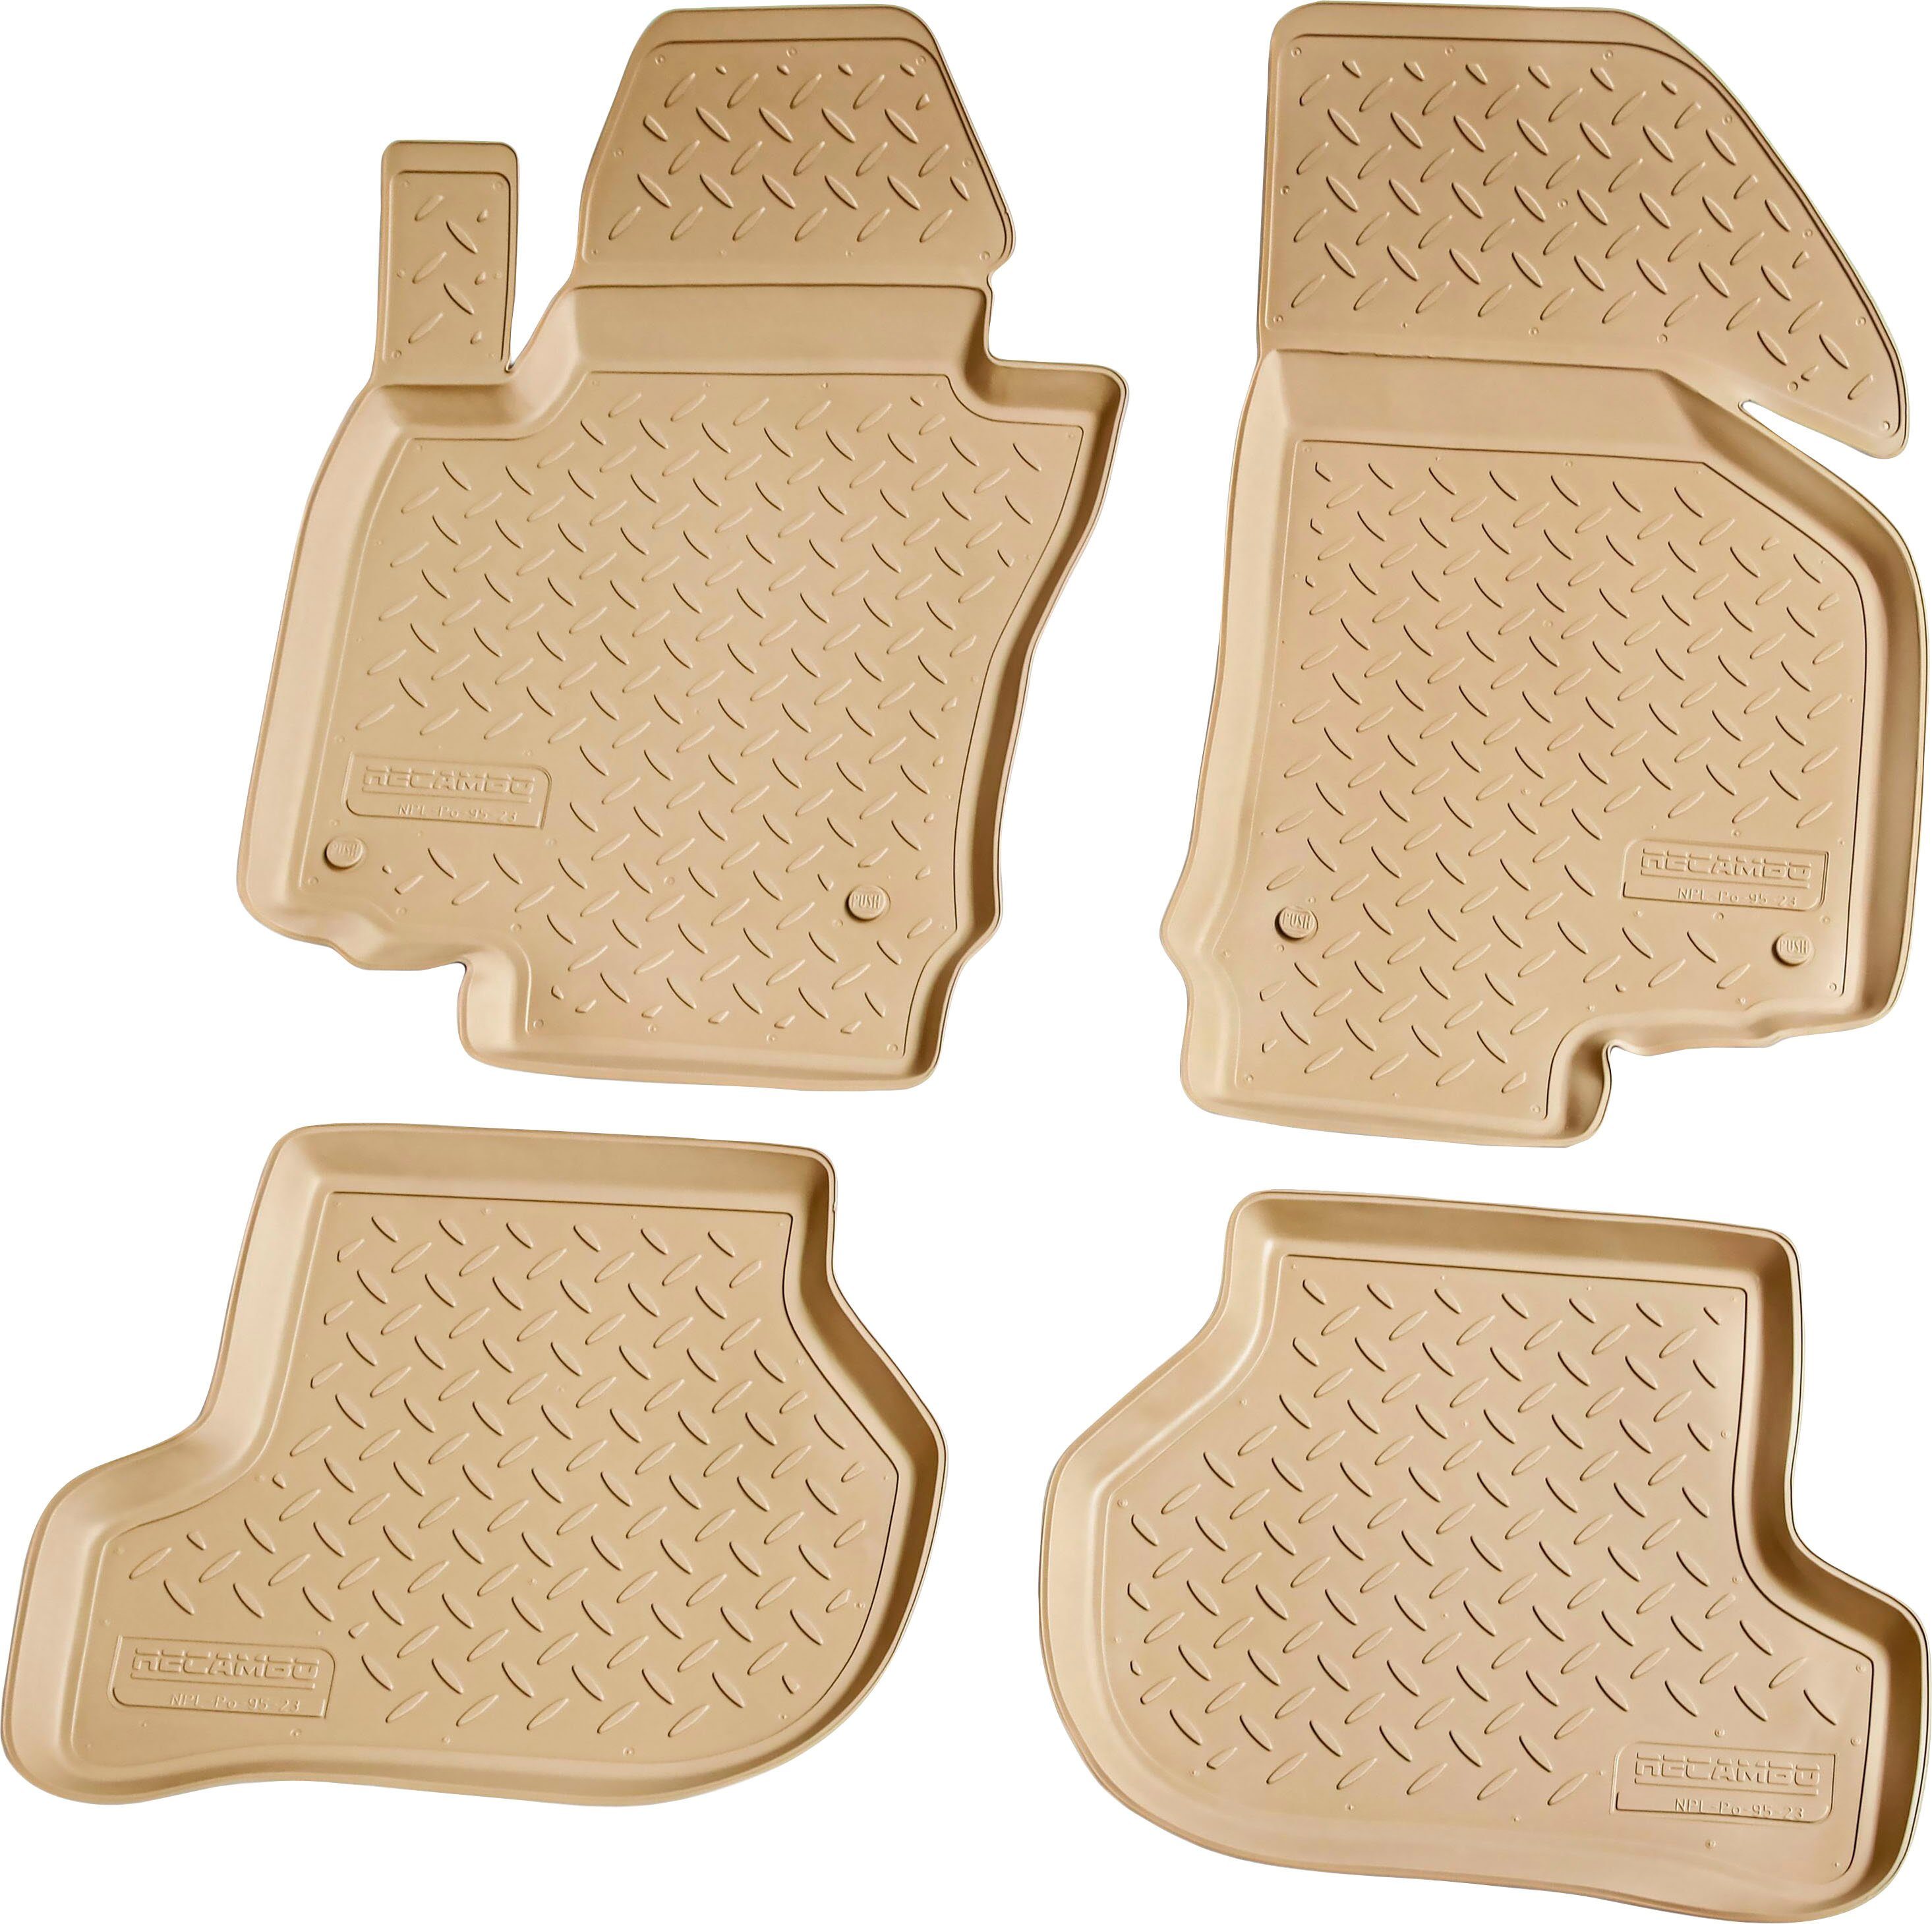 RECAMBO Passform-Fußmatten CustomComforts (4 2017, perfekte Scirocco, für Passform VW St), 2008 